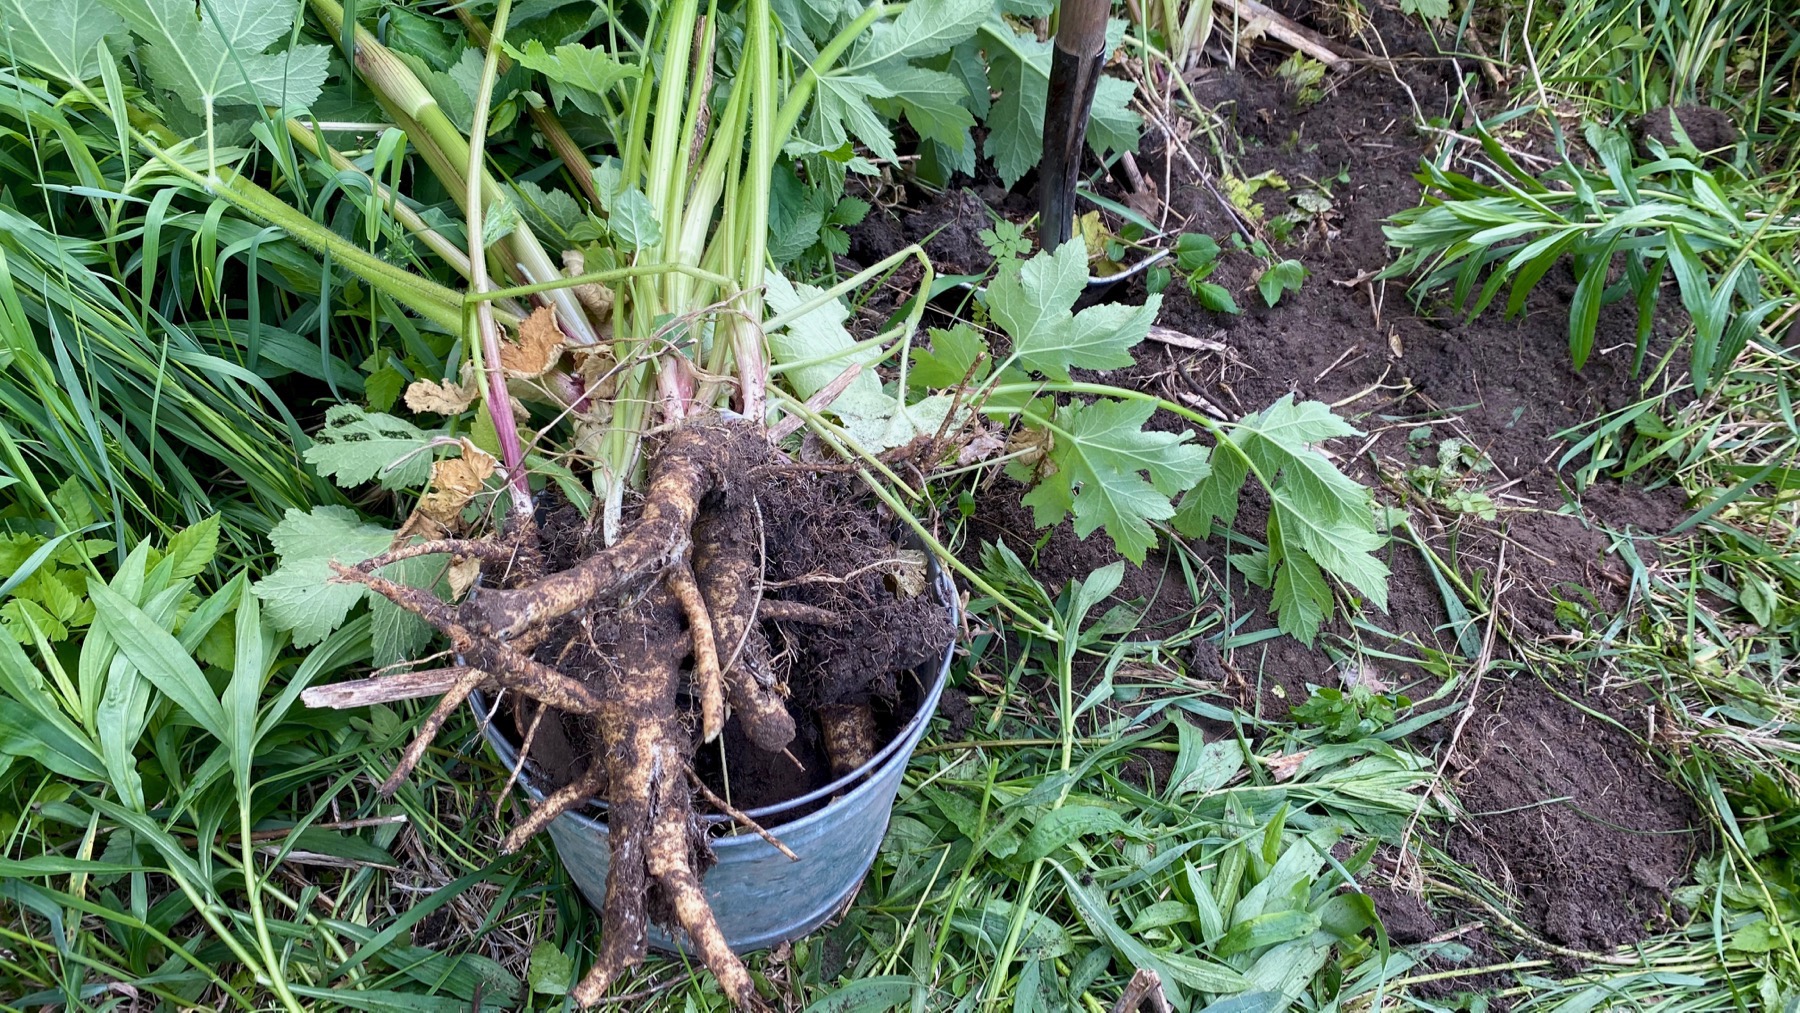 Cow parsnip roots